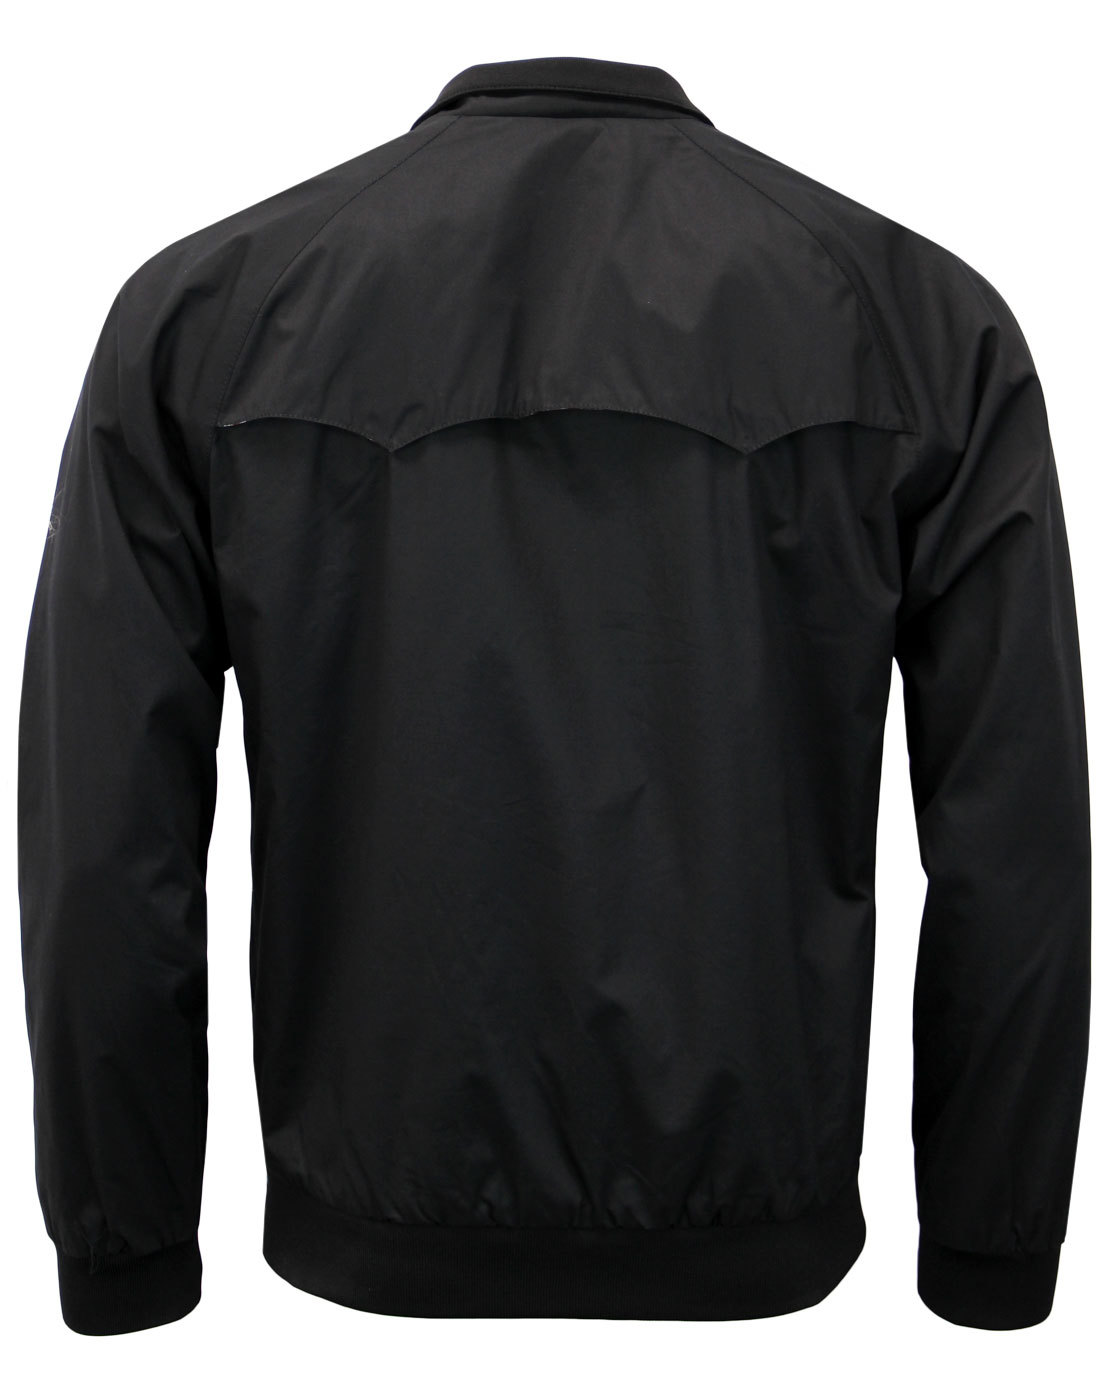 BEN SHERMAN Men's 1960s Mod Retro Harrington Jacket in Black